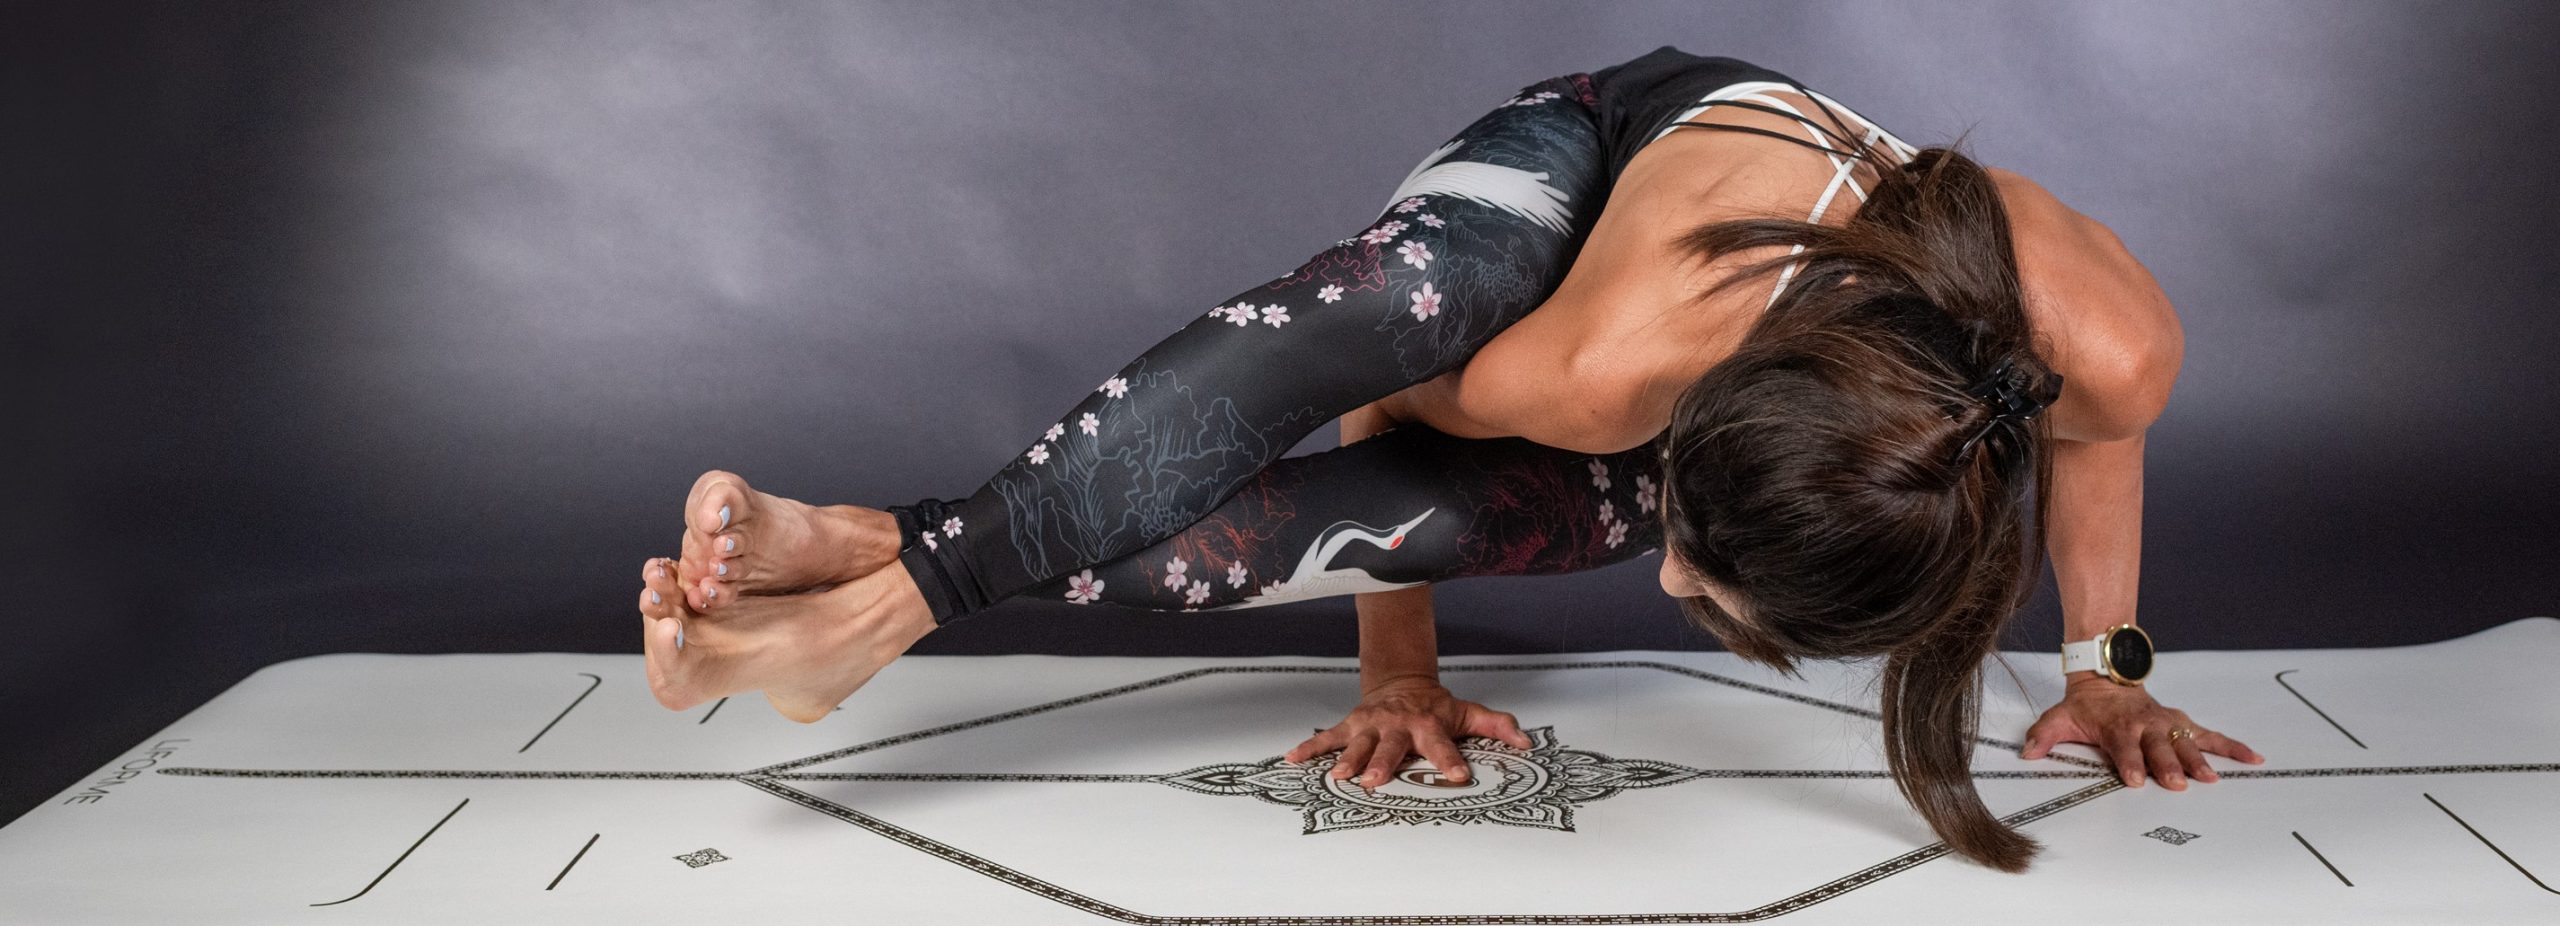 The Health Architect - Sarah Kekus in yoga pose